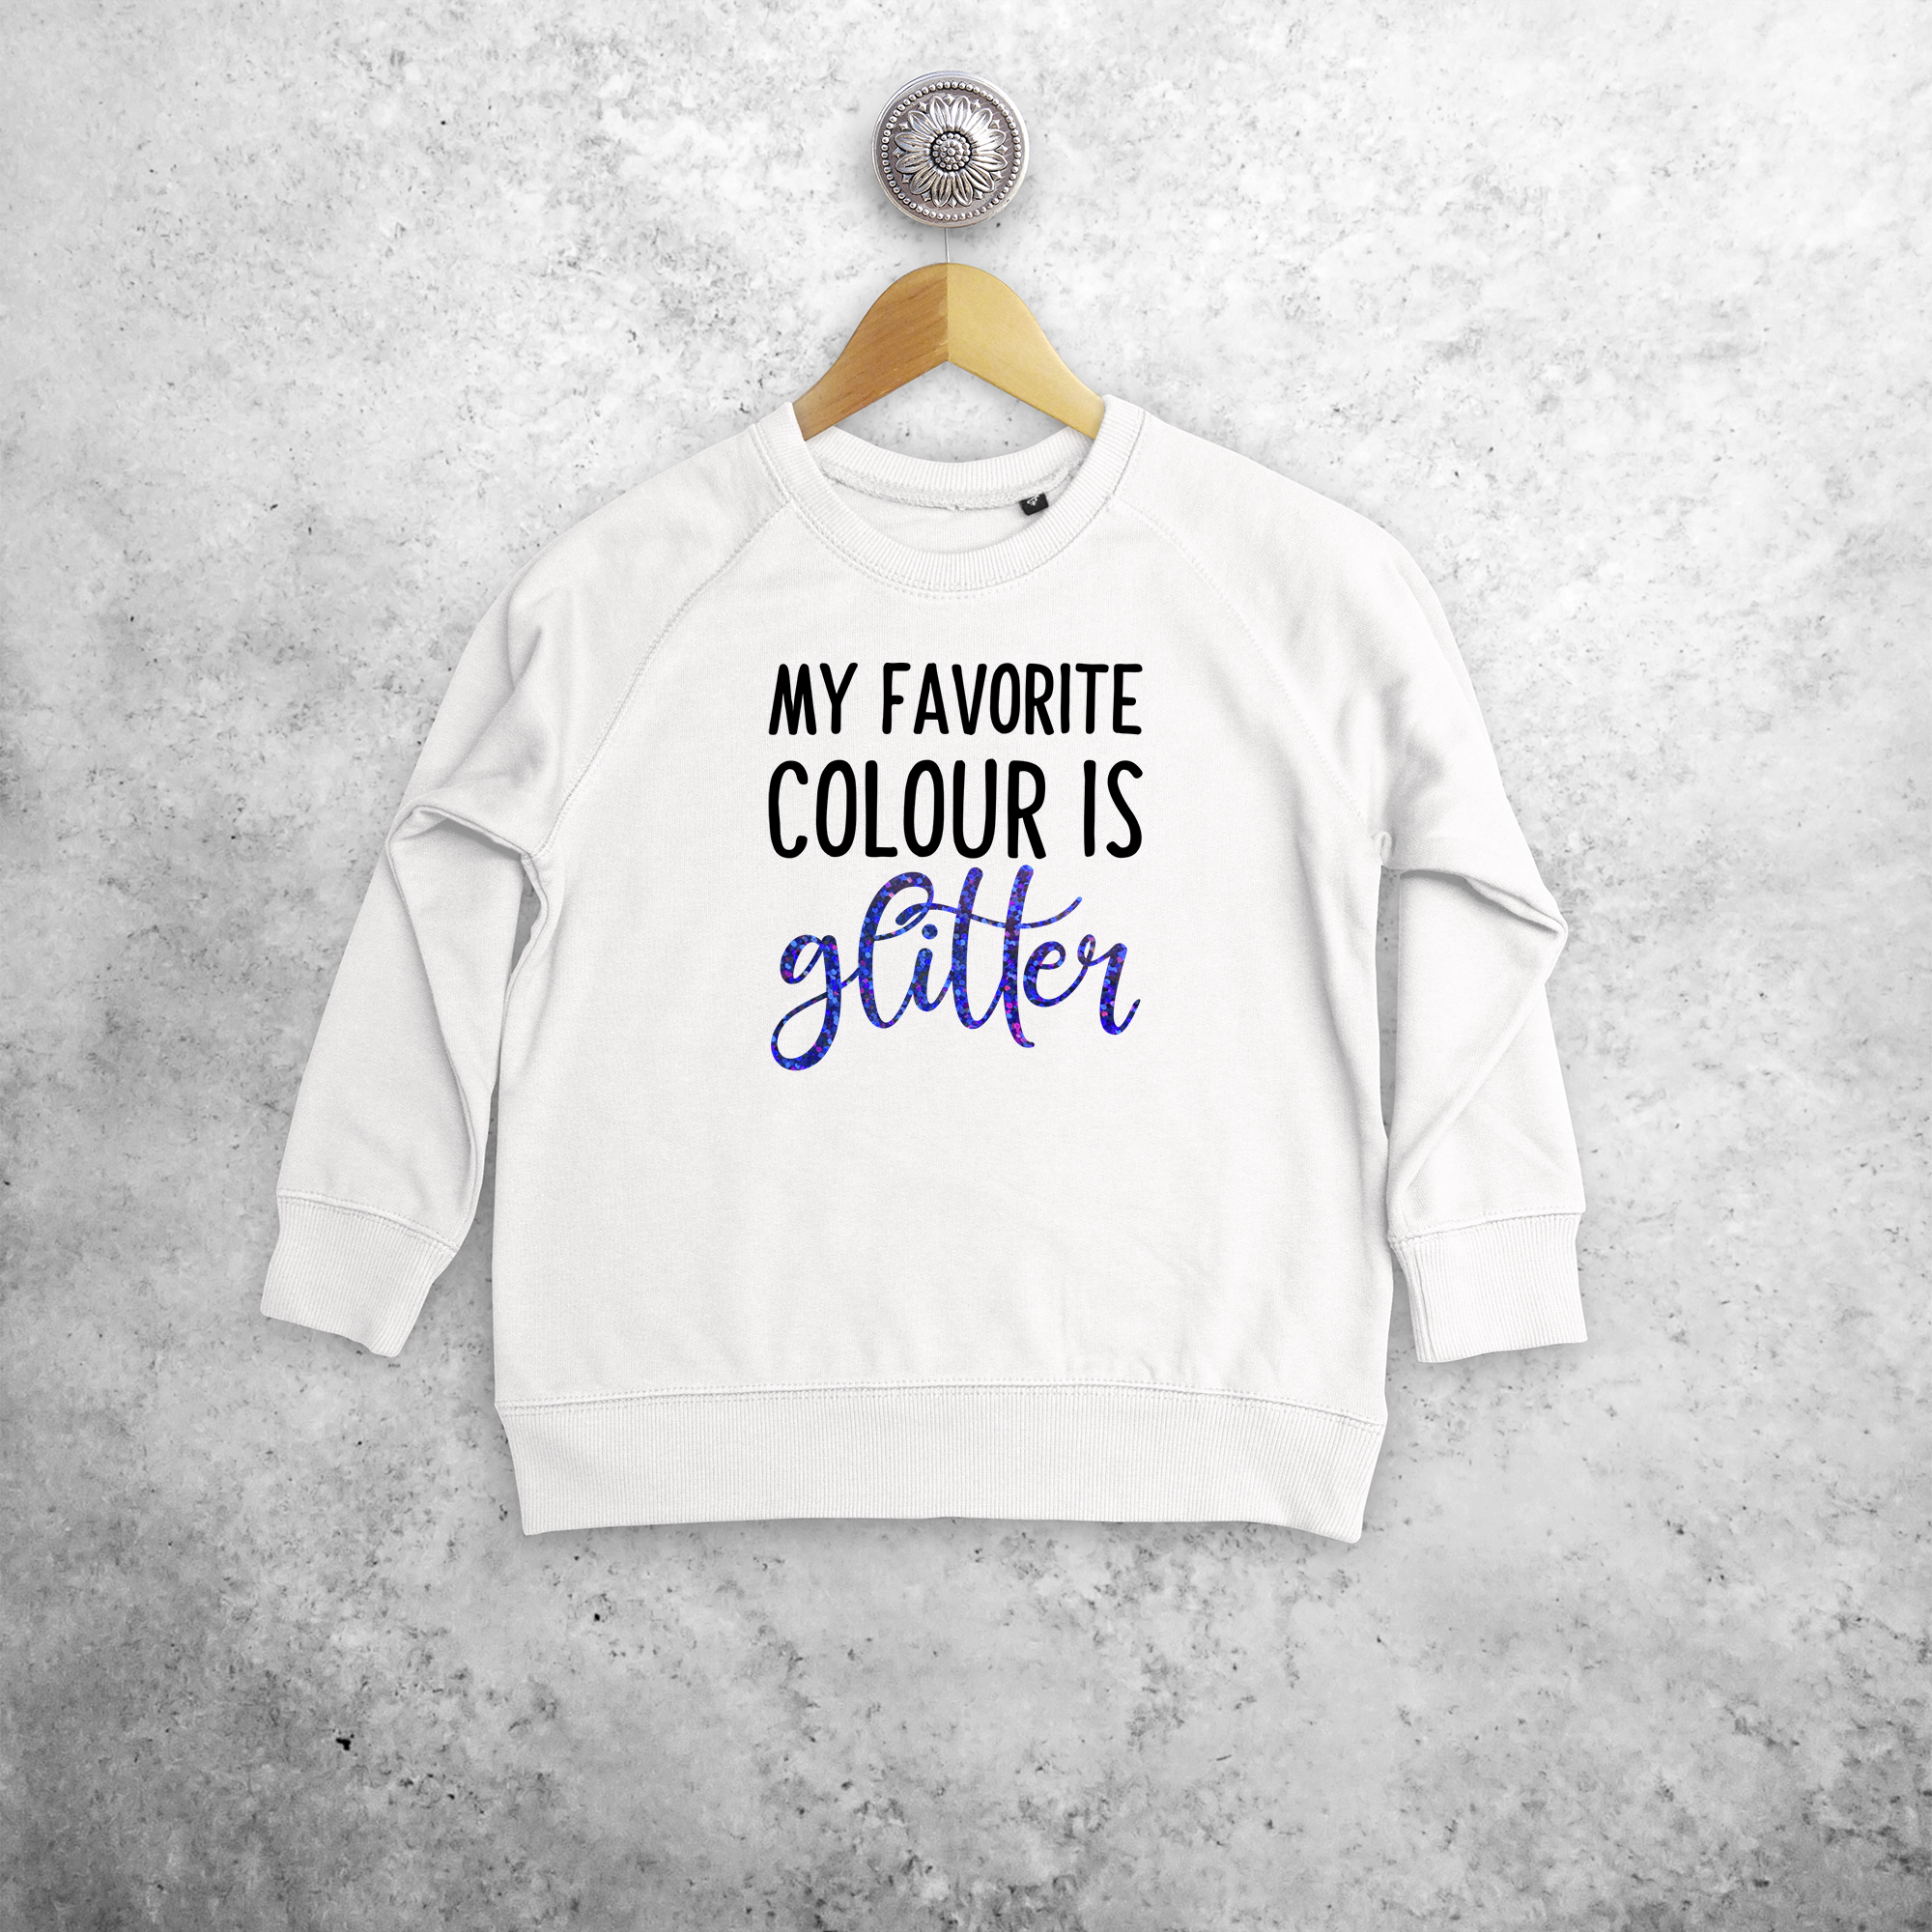 'My favorite colour is glitter' kids sweater